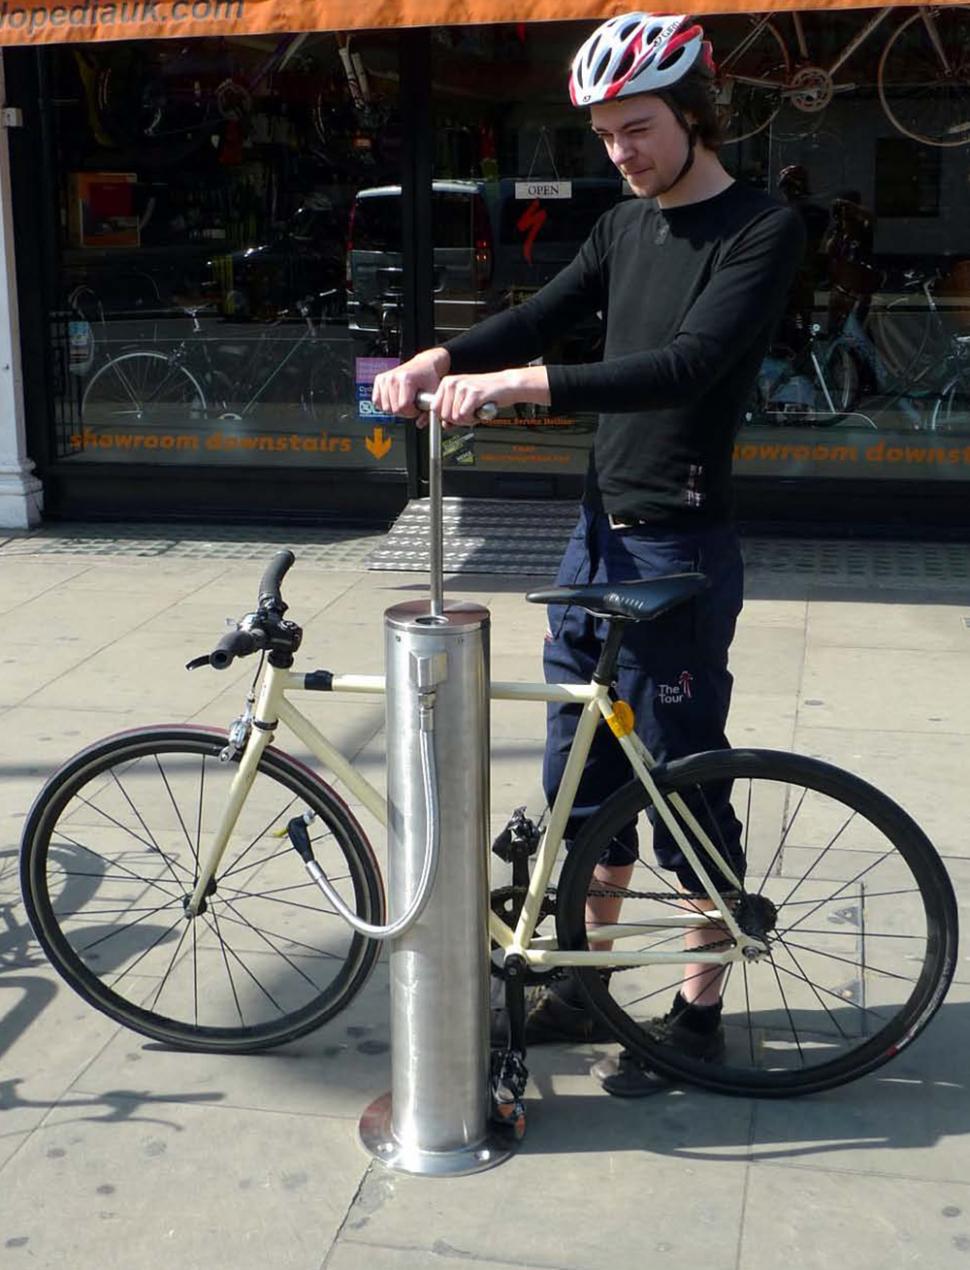 Cyclehoop bring municipal bike to streets |